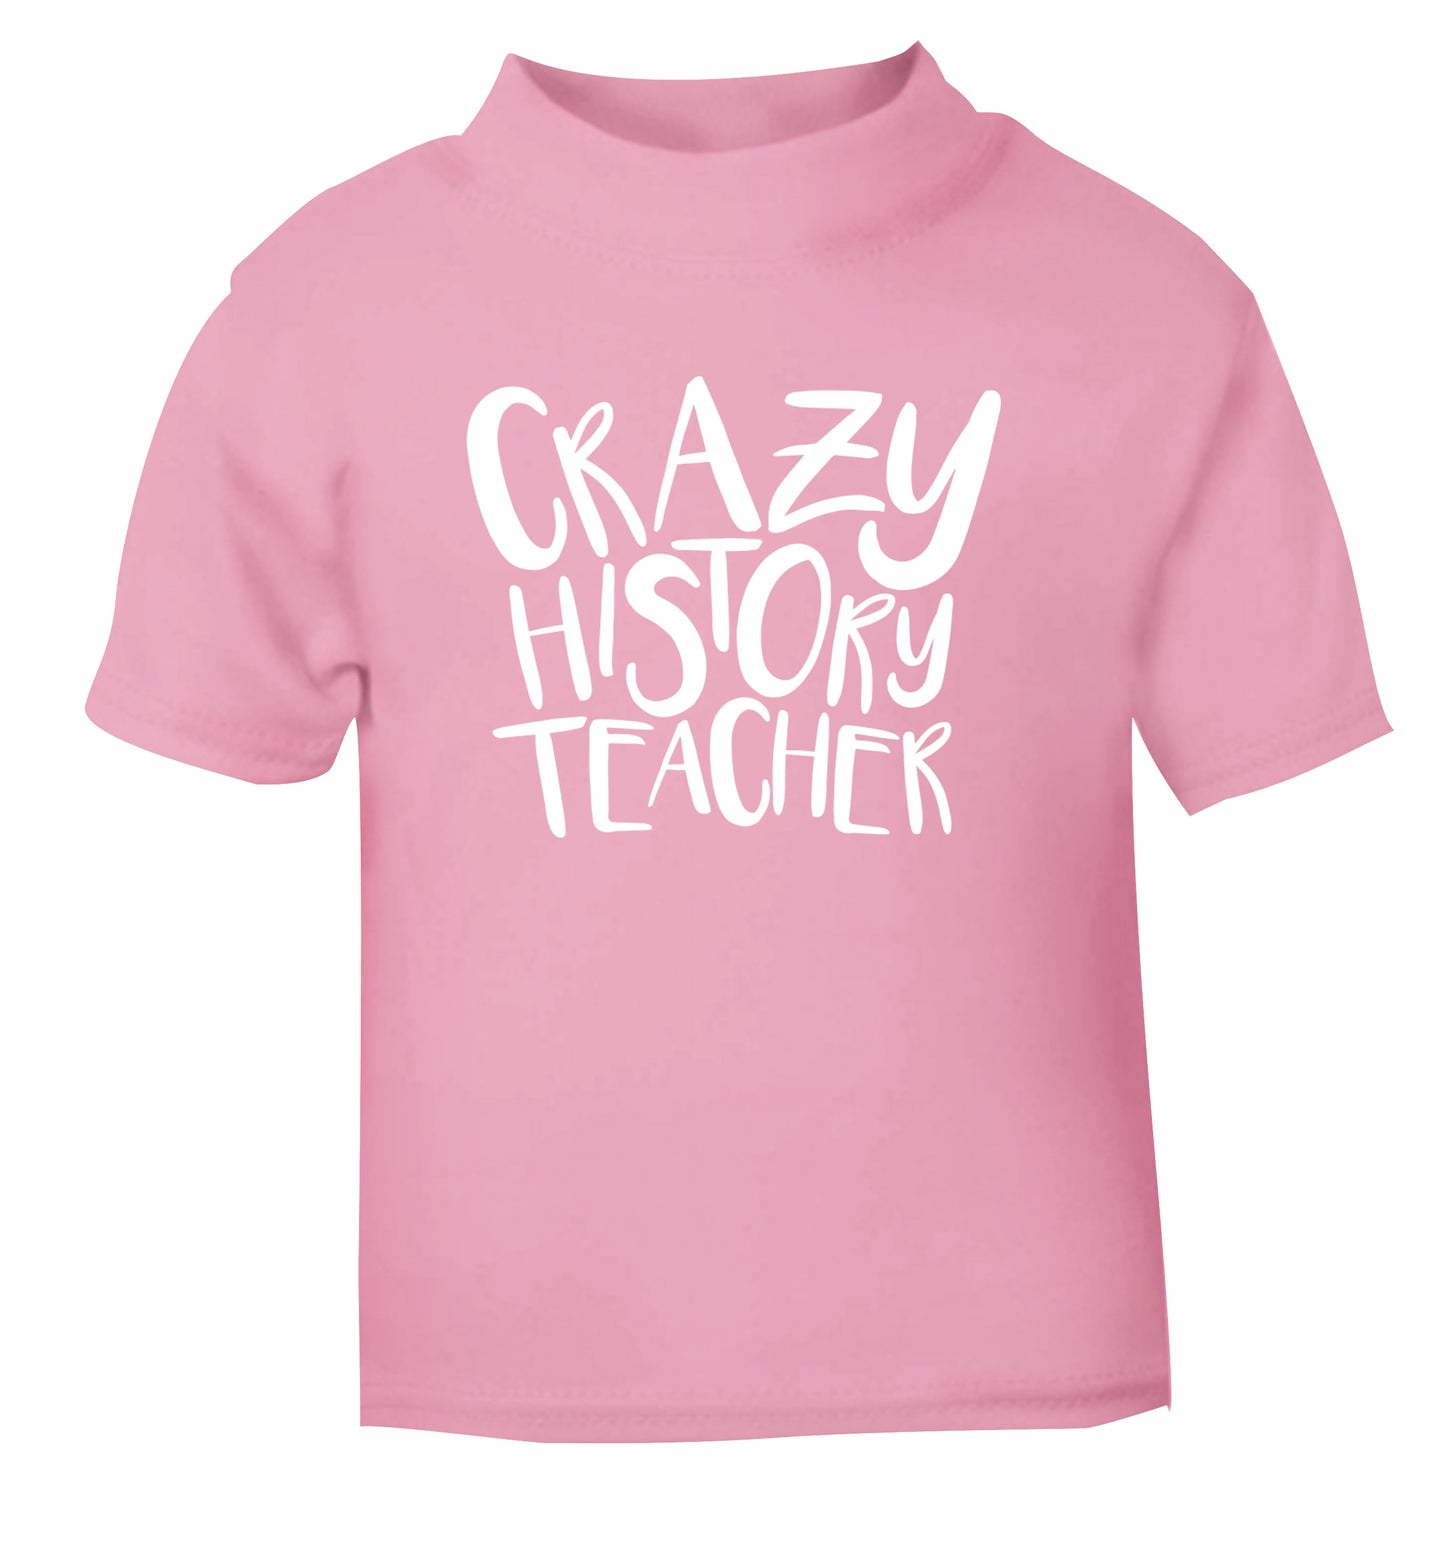 Crazy history teacher light pink Baby Toddler Tshirt 2 Years